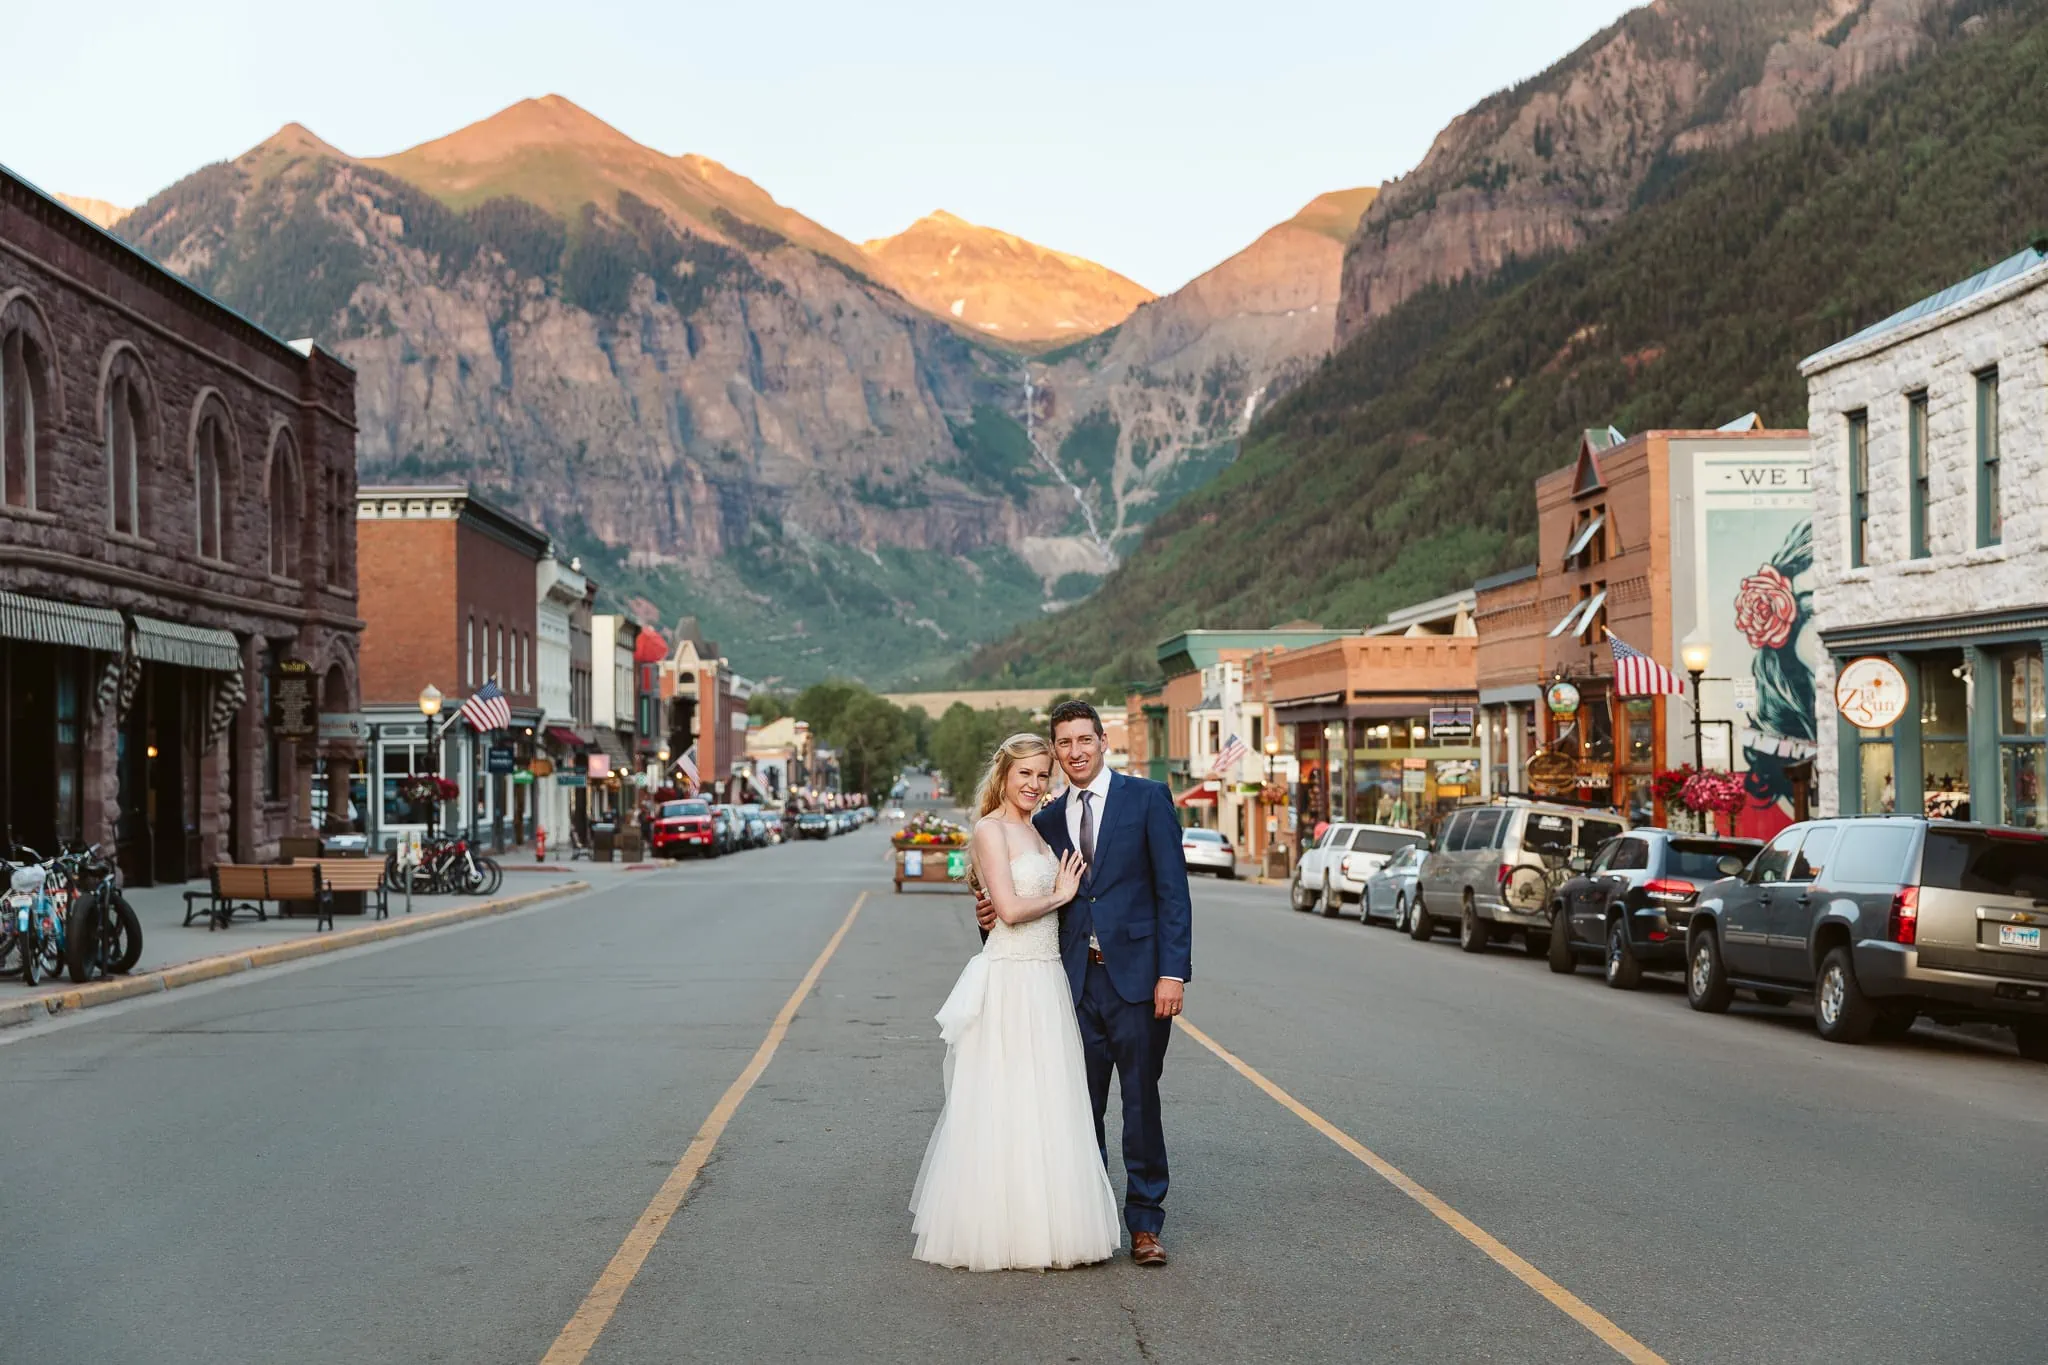 Wedding photos on the main street of Telluride